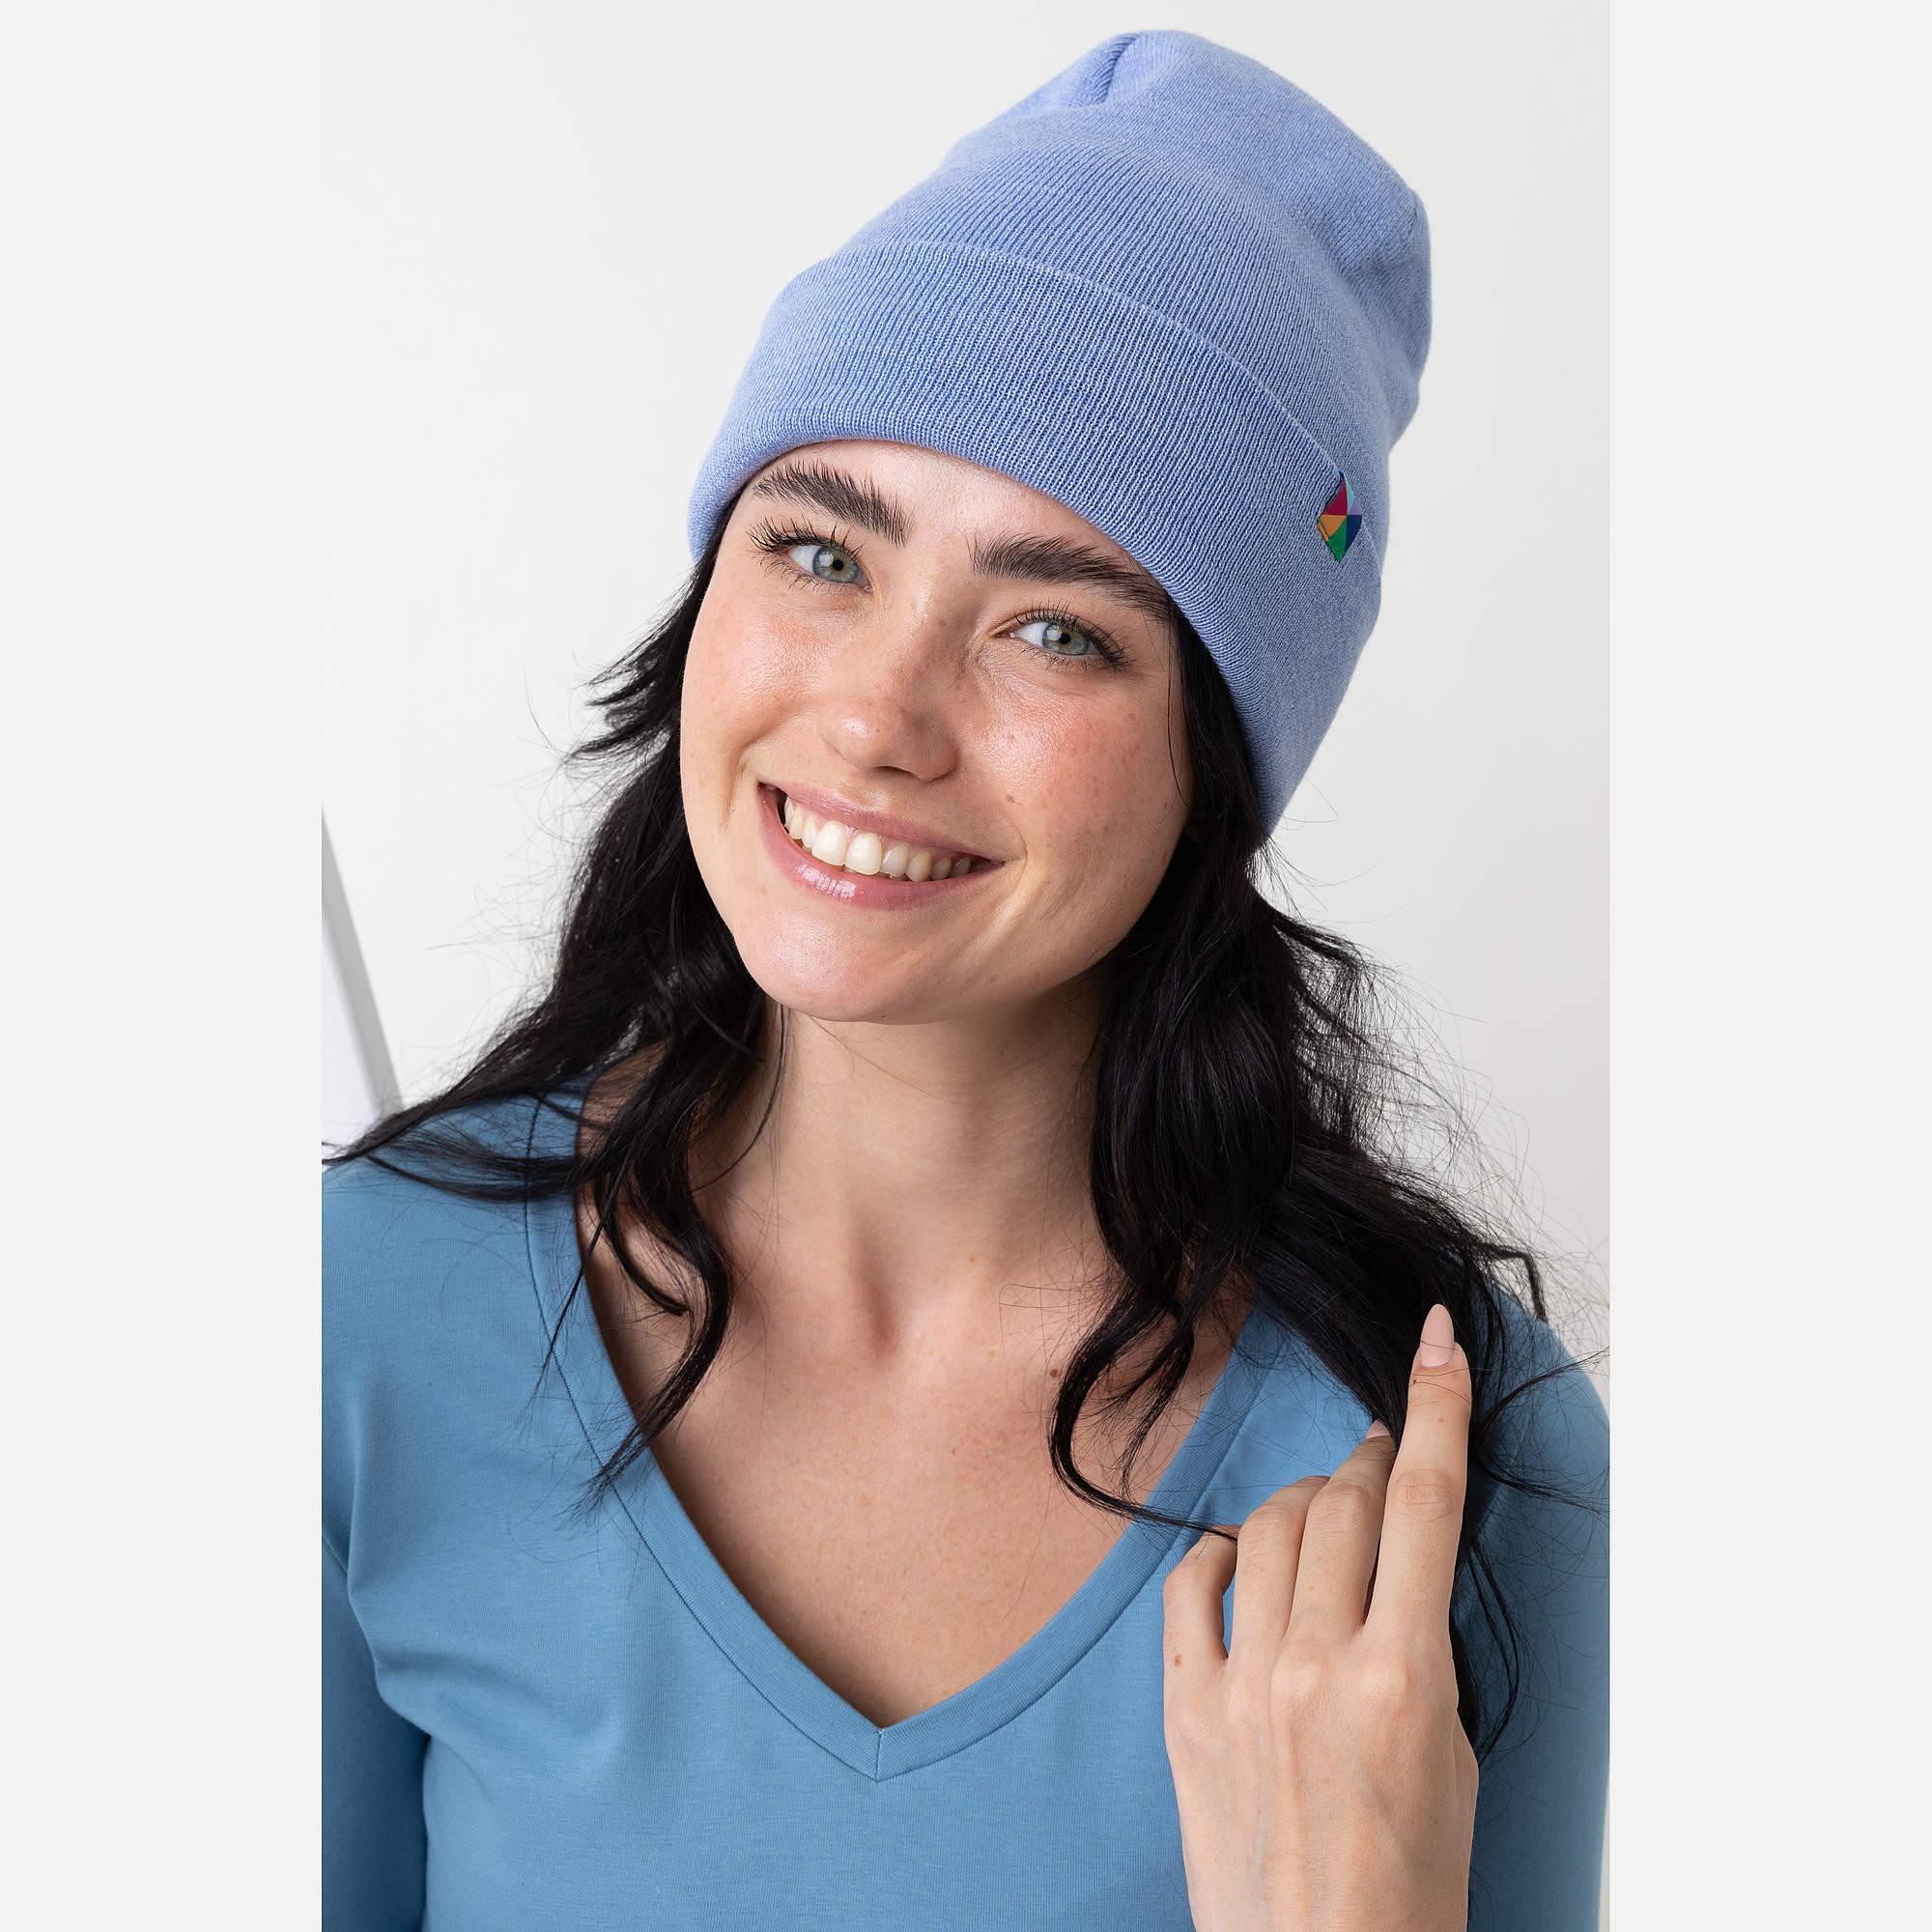 Błękitna czapka z wełny merino o drobnym splocie